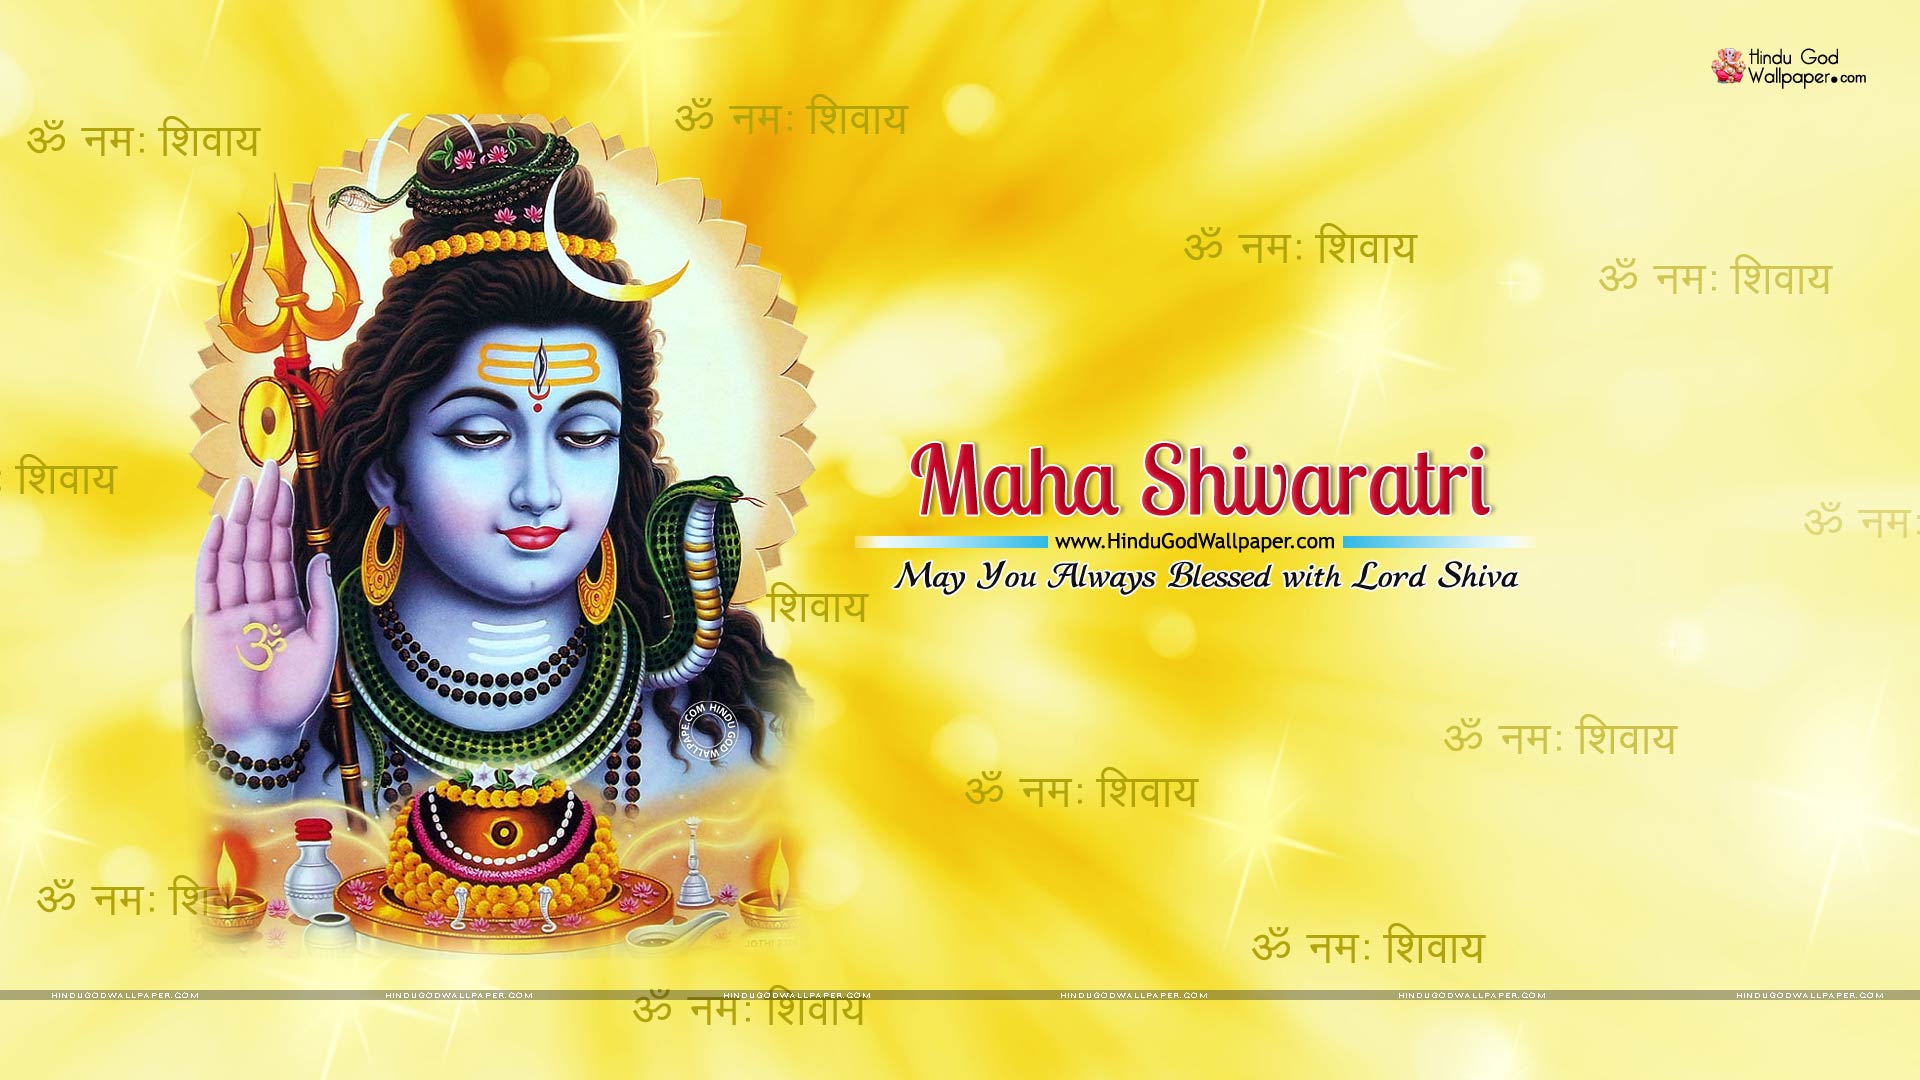 P maha shivaratri hd wallpapers full size download